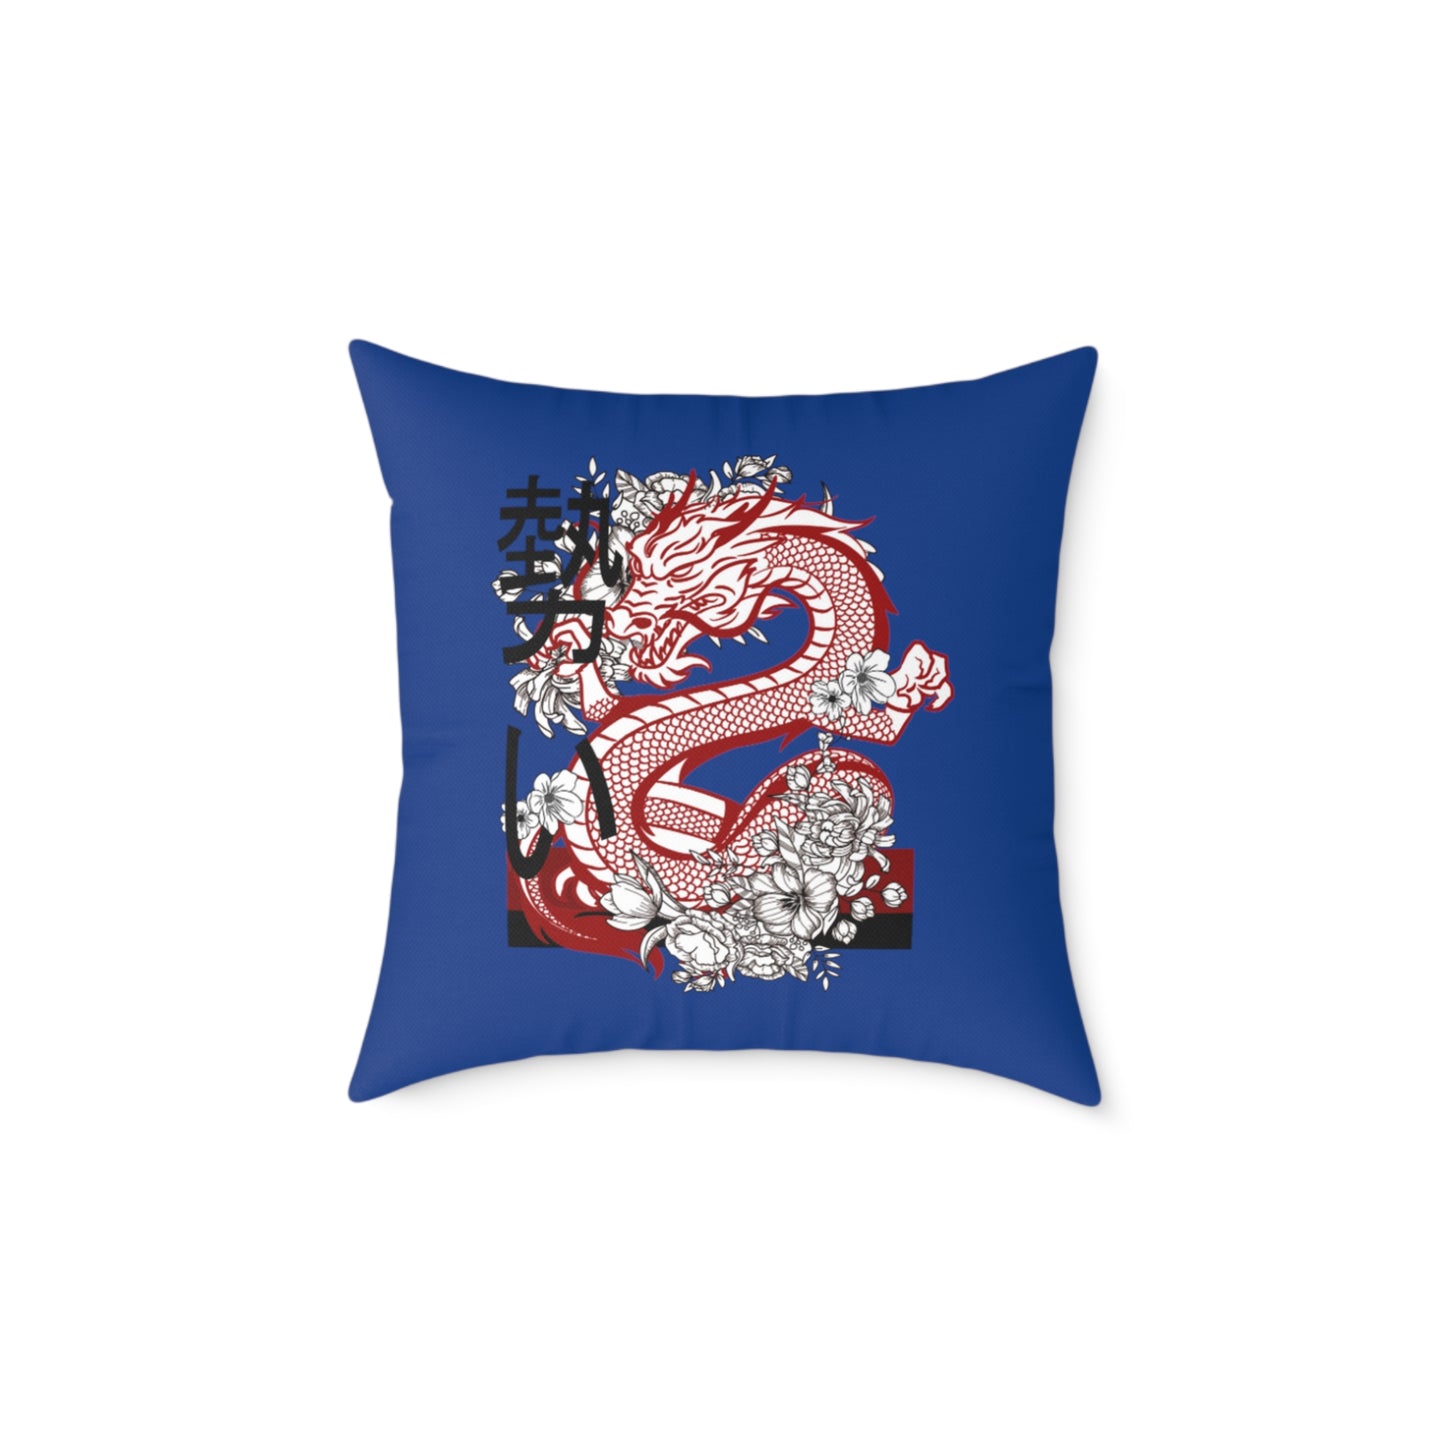 Spun Polyester Pillow: Dragons Dark Blue